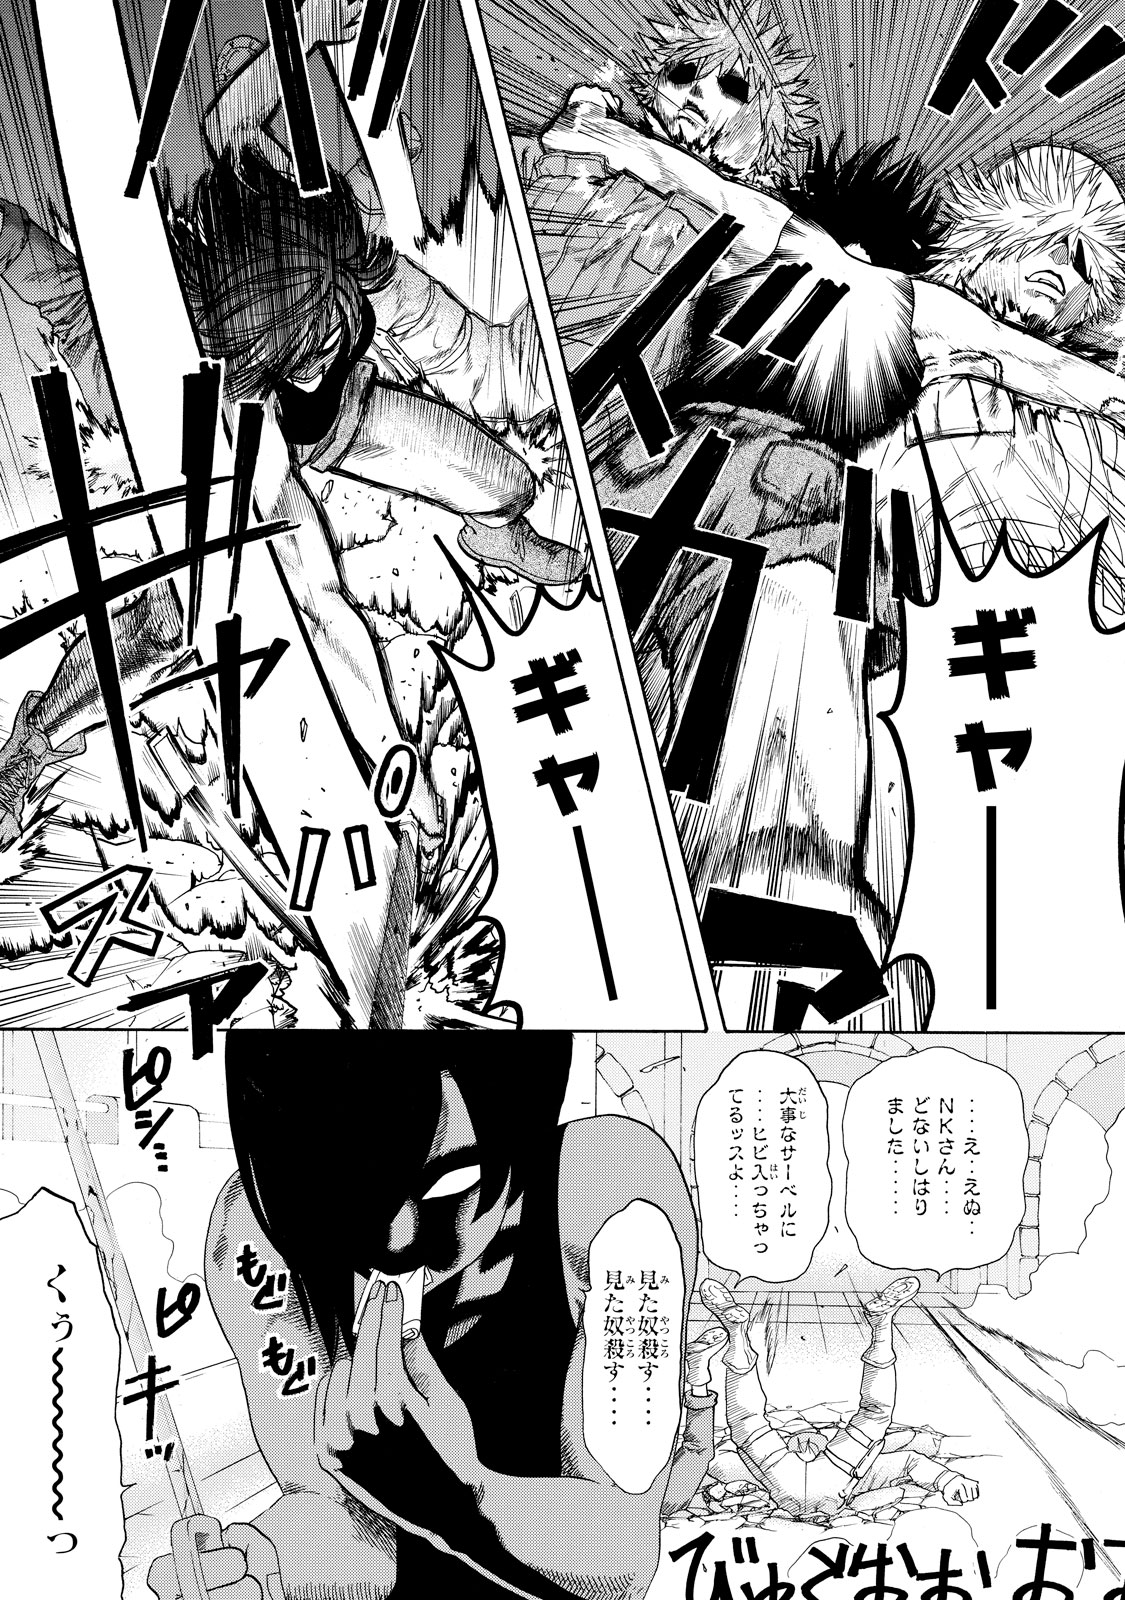 Hataraku Saibou - Chapter 22 - Page 11